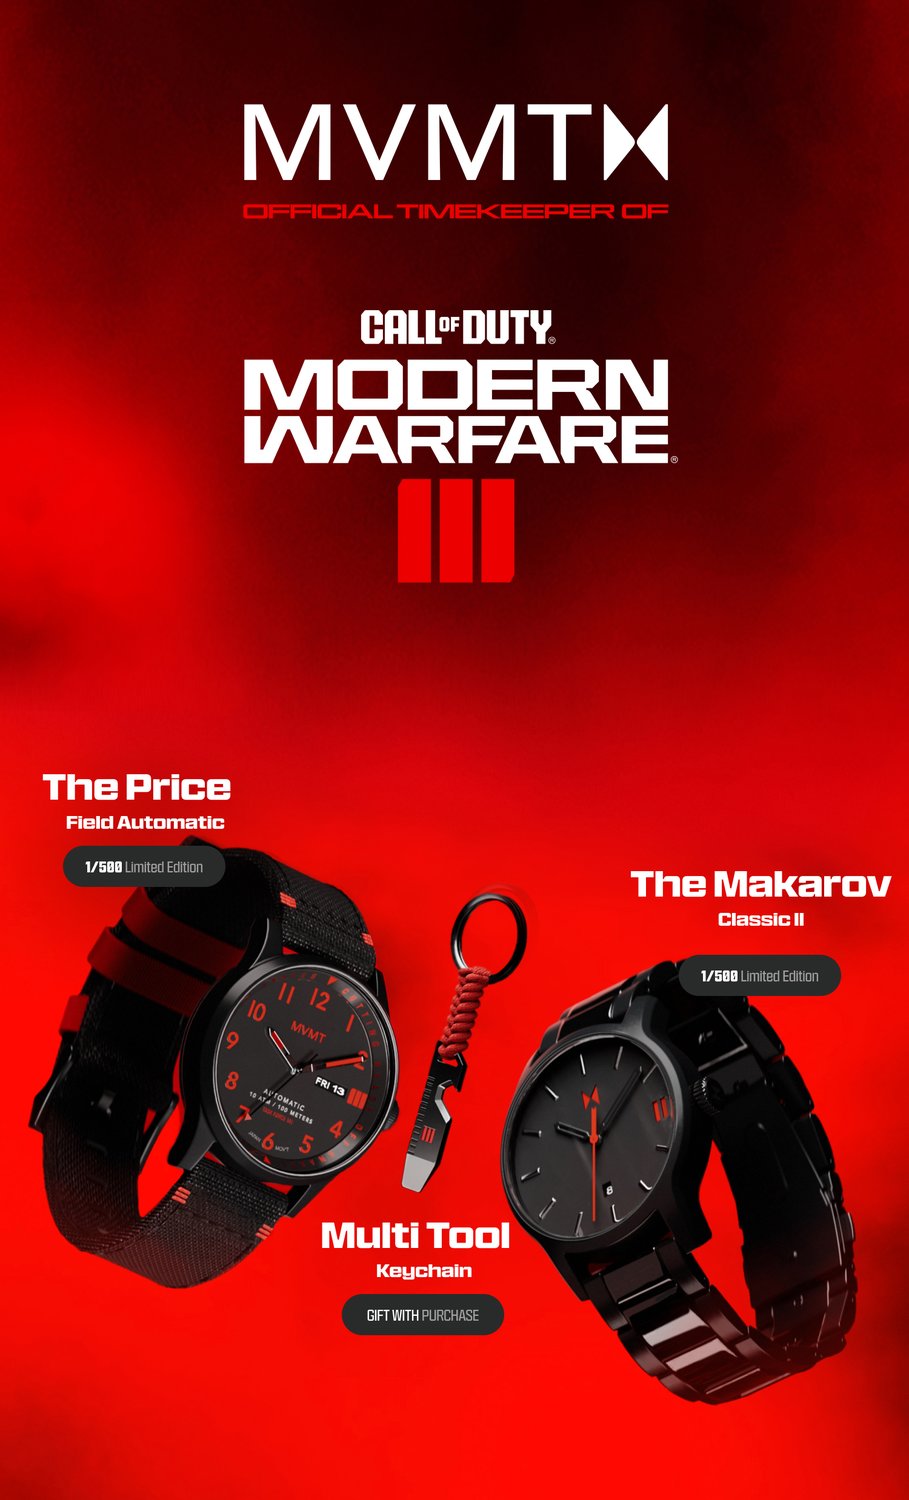 MVMT x Call of Duty Modern Warfare III